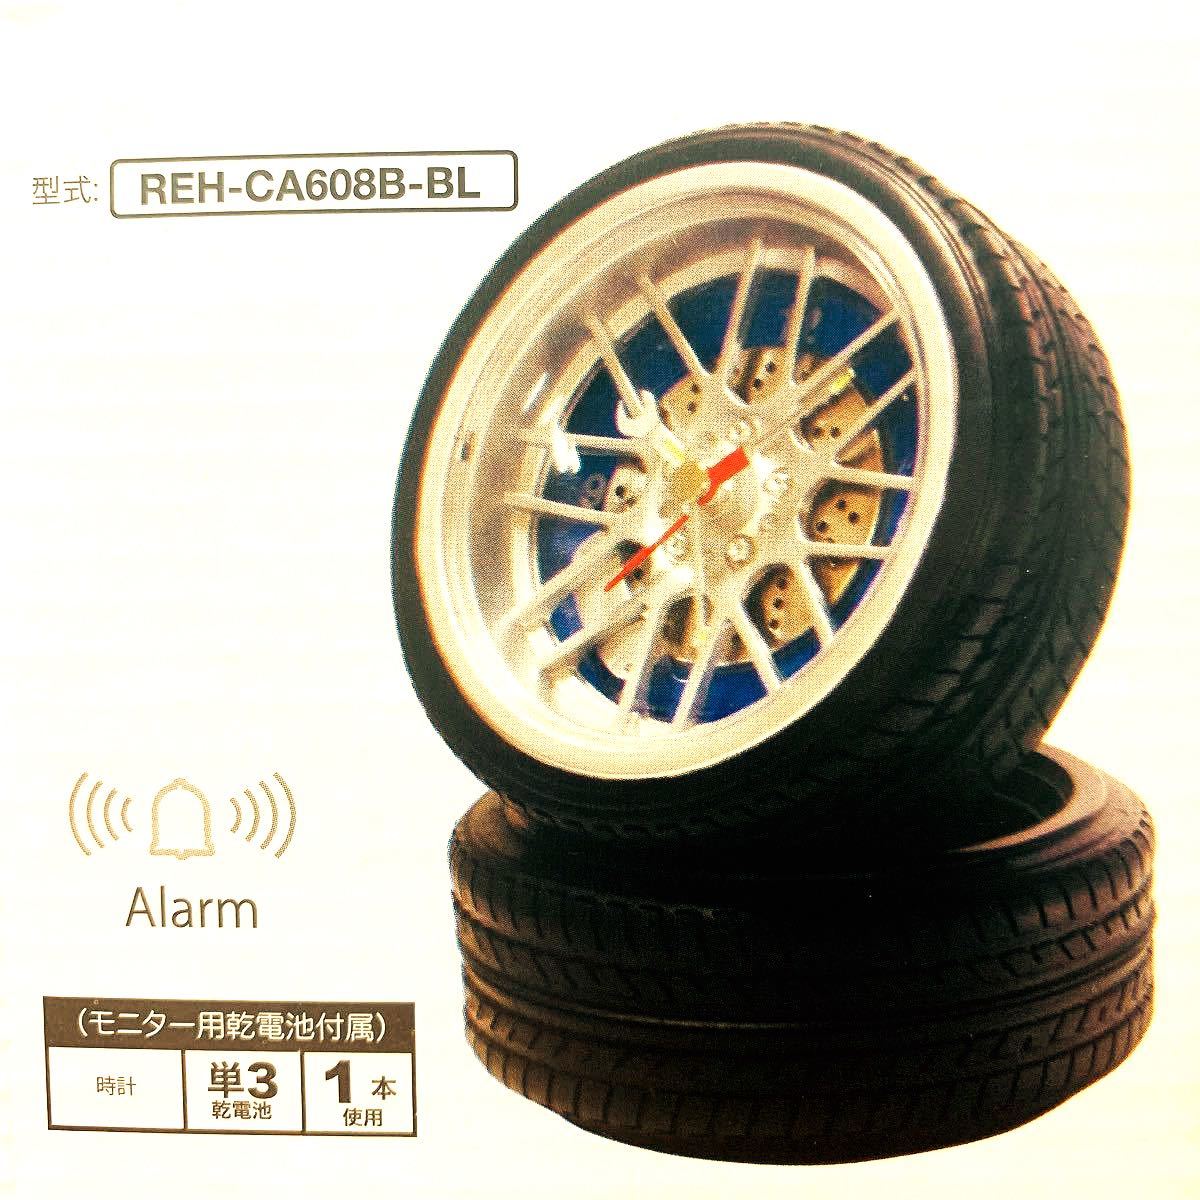 REH タイヤクロック (タイヤ形目覚まし時計) ブルー CA608B-BL 〔インテリア 置時計〕